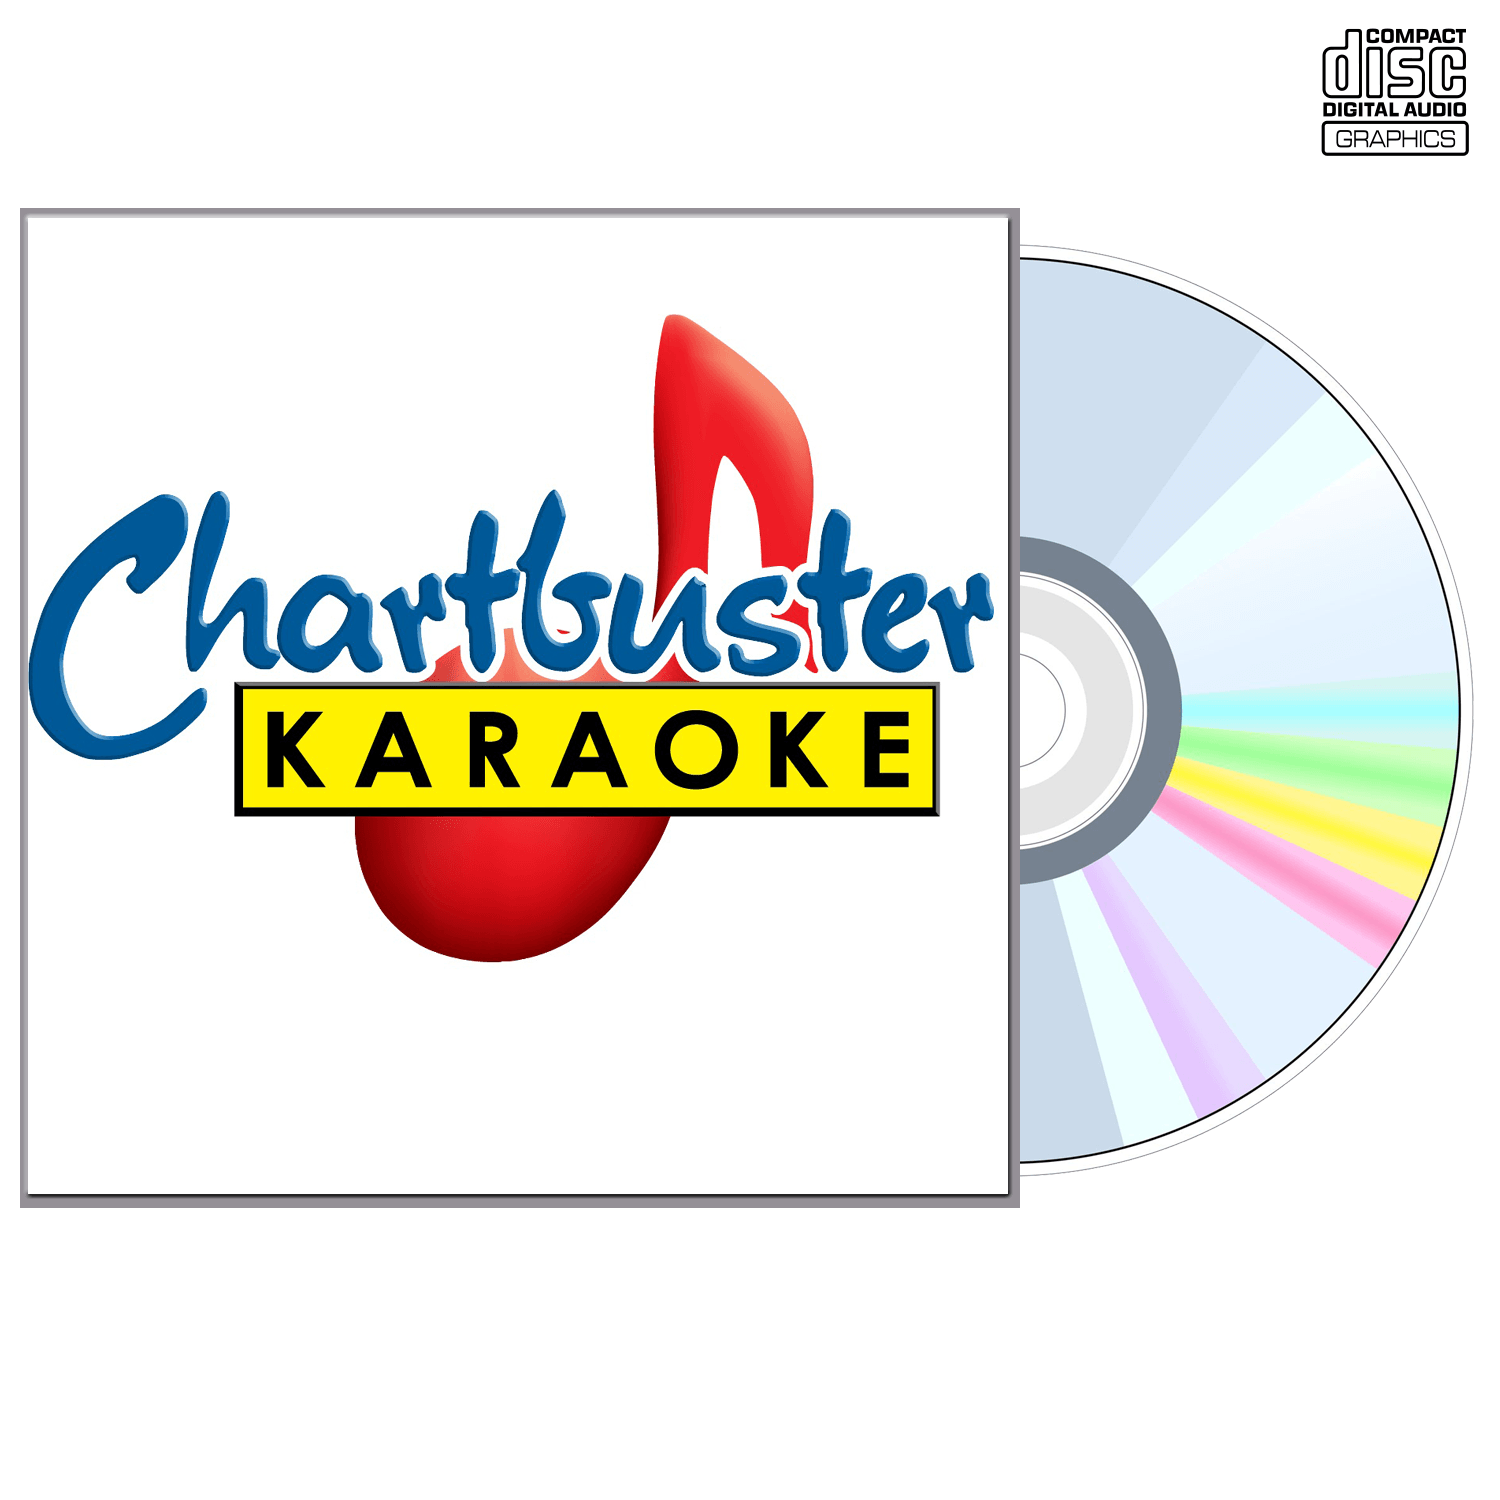 Ultimate 90's Collection V08 - CD+G - Chartbuster Karaoke - Karaoke Home Entertainment